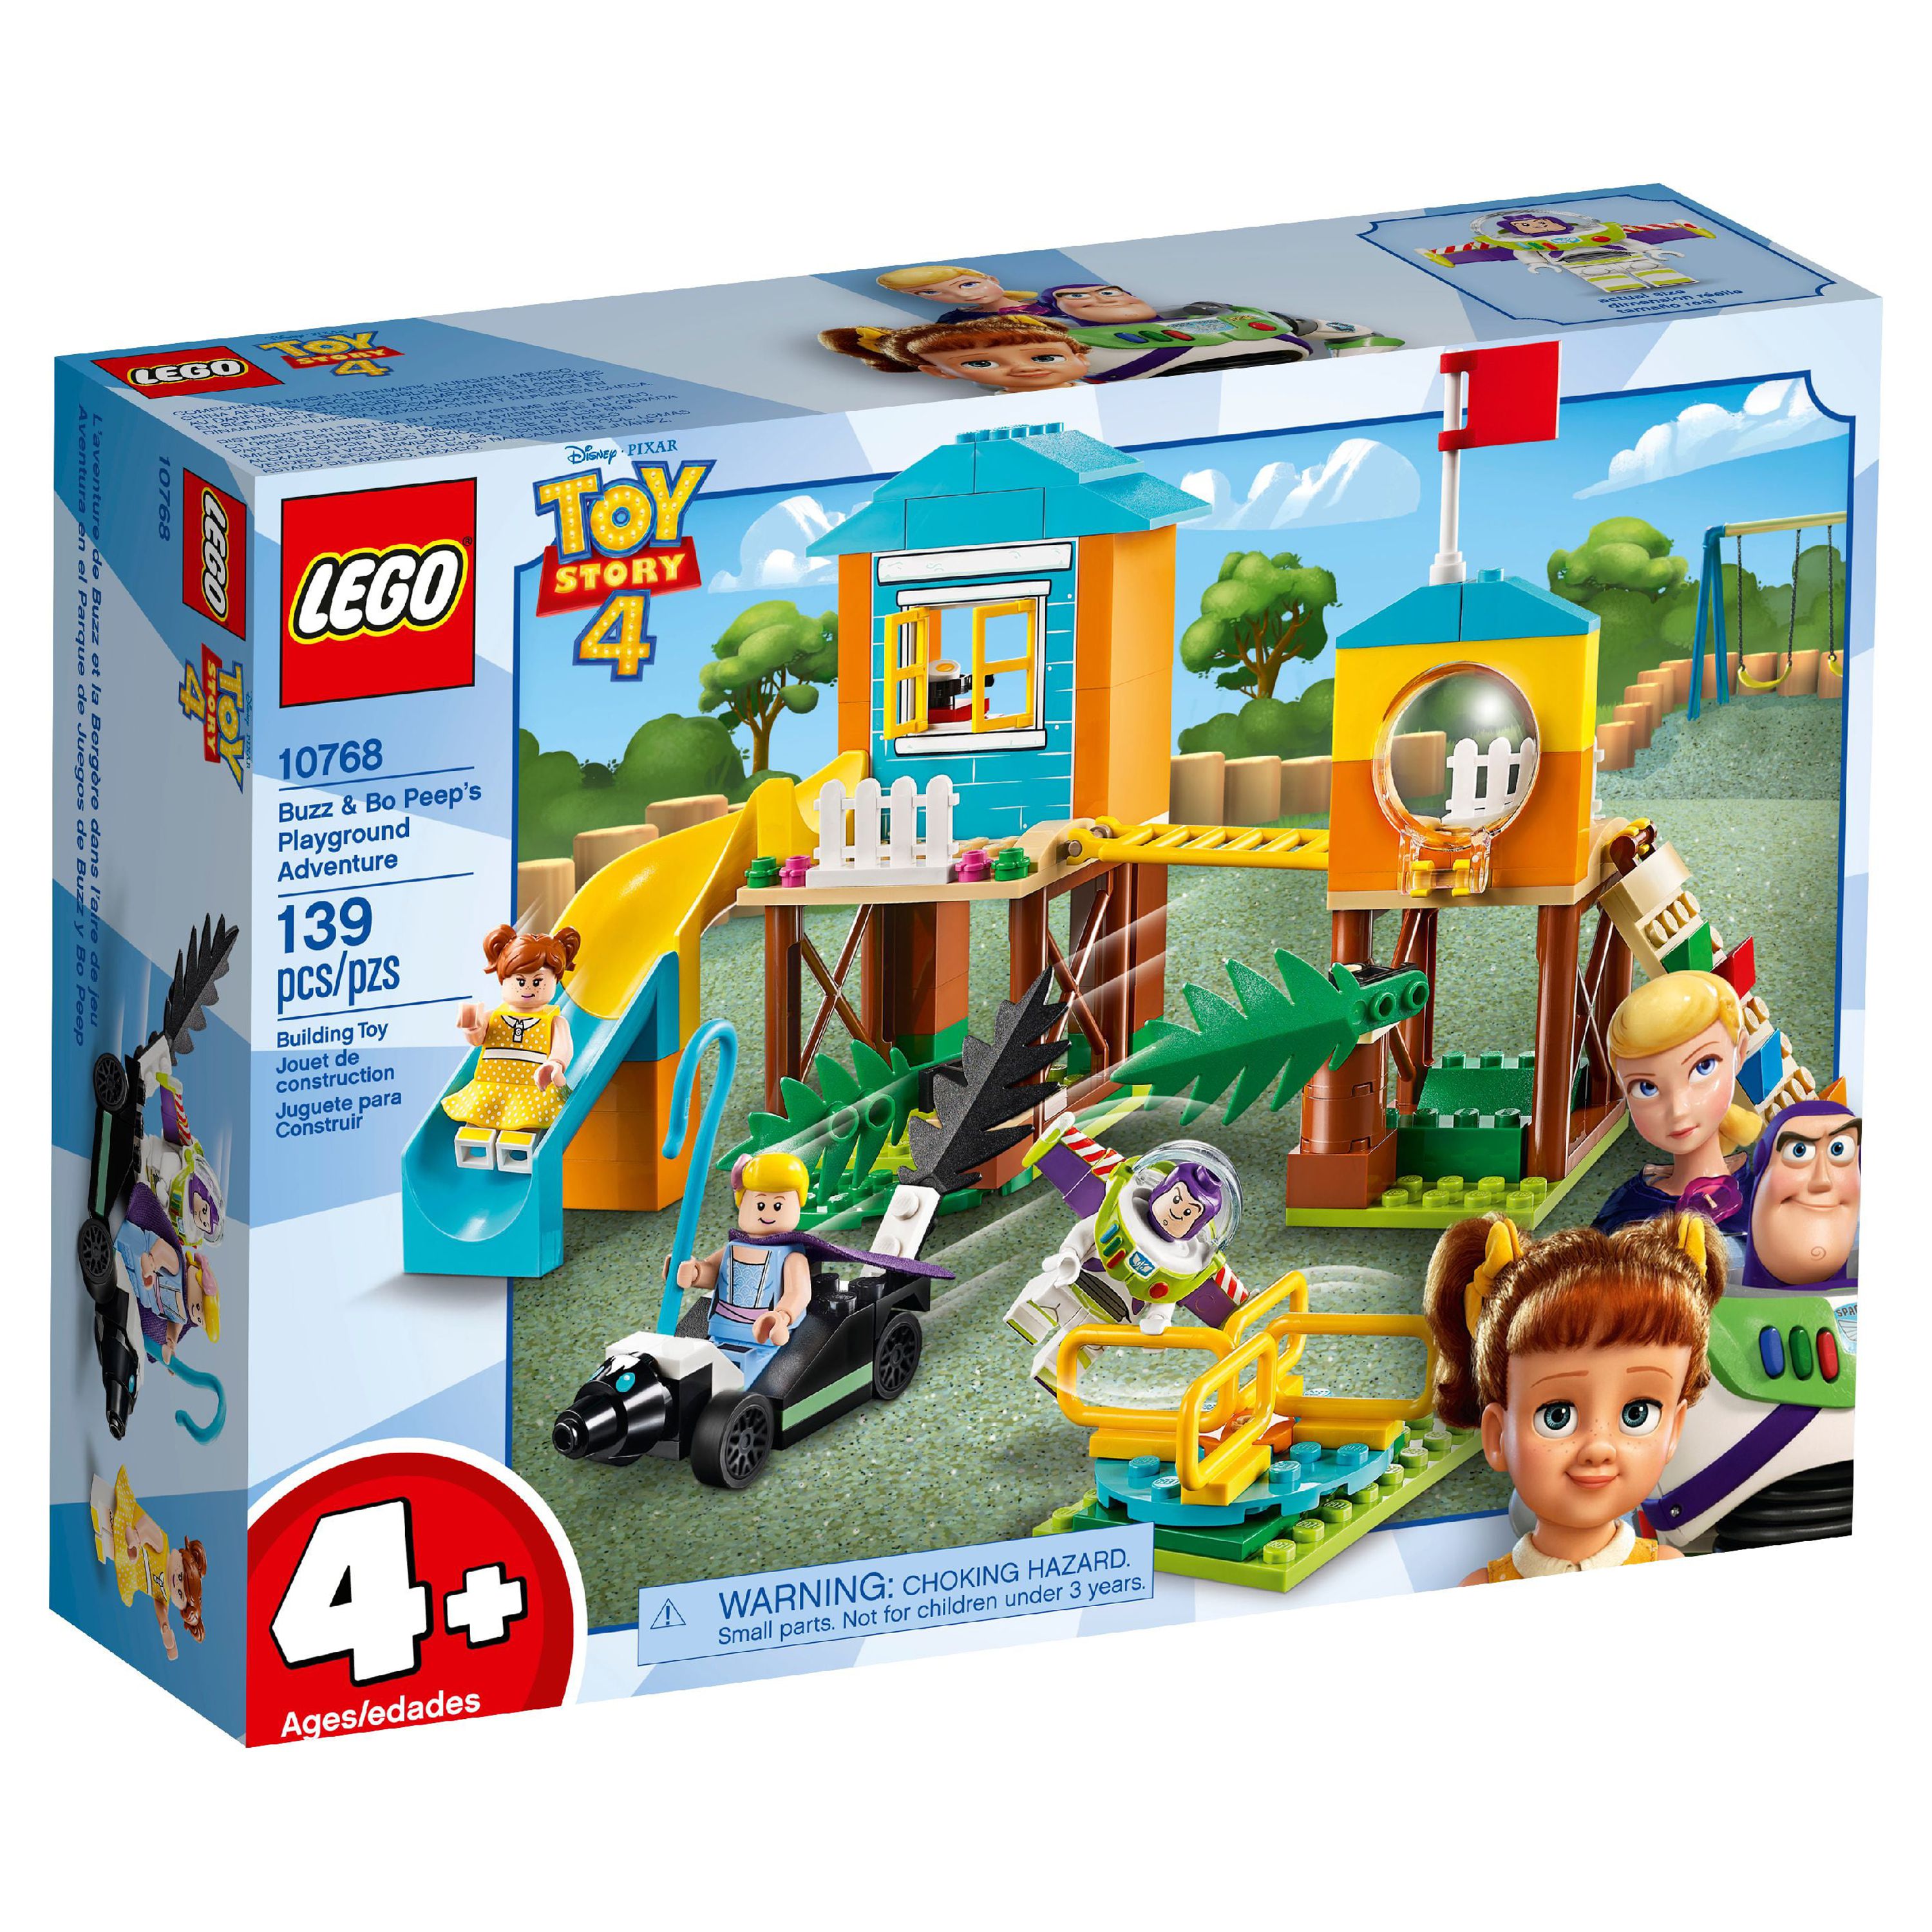 LEGO 4+ Toy Story 4 Buzz & Bo Peep's Playground Adventure Building Set 10768 - image 4 of 7